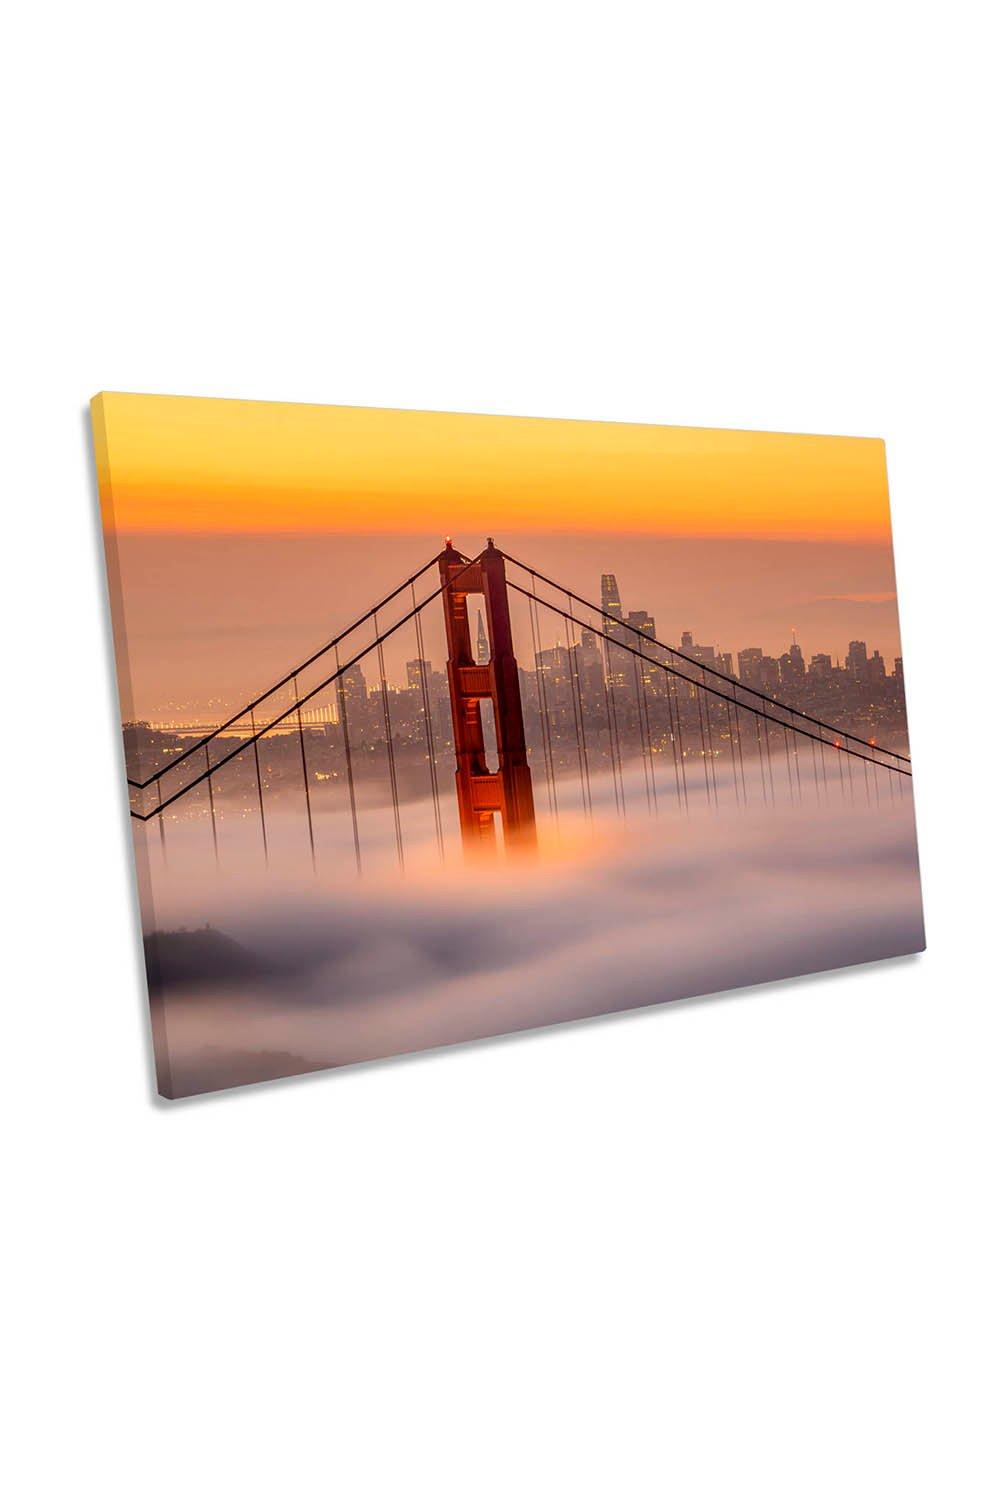 The San Francisco Fog Golden Gate Bridge Canvas Wall Art Picture Print